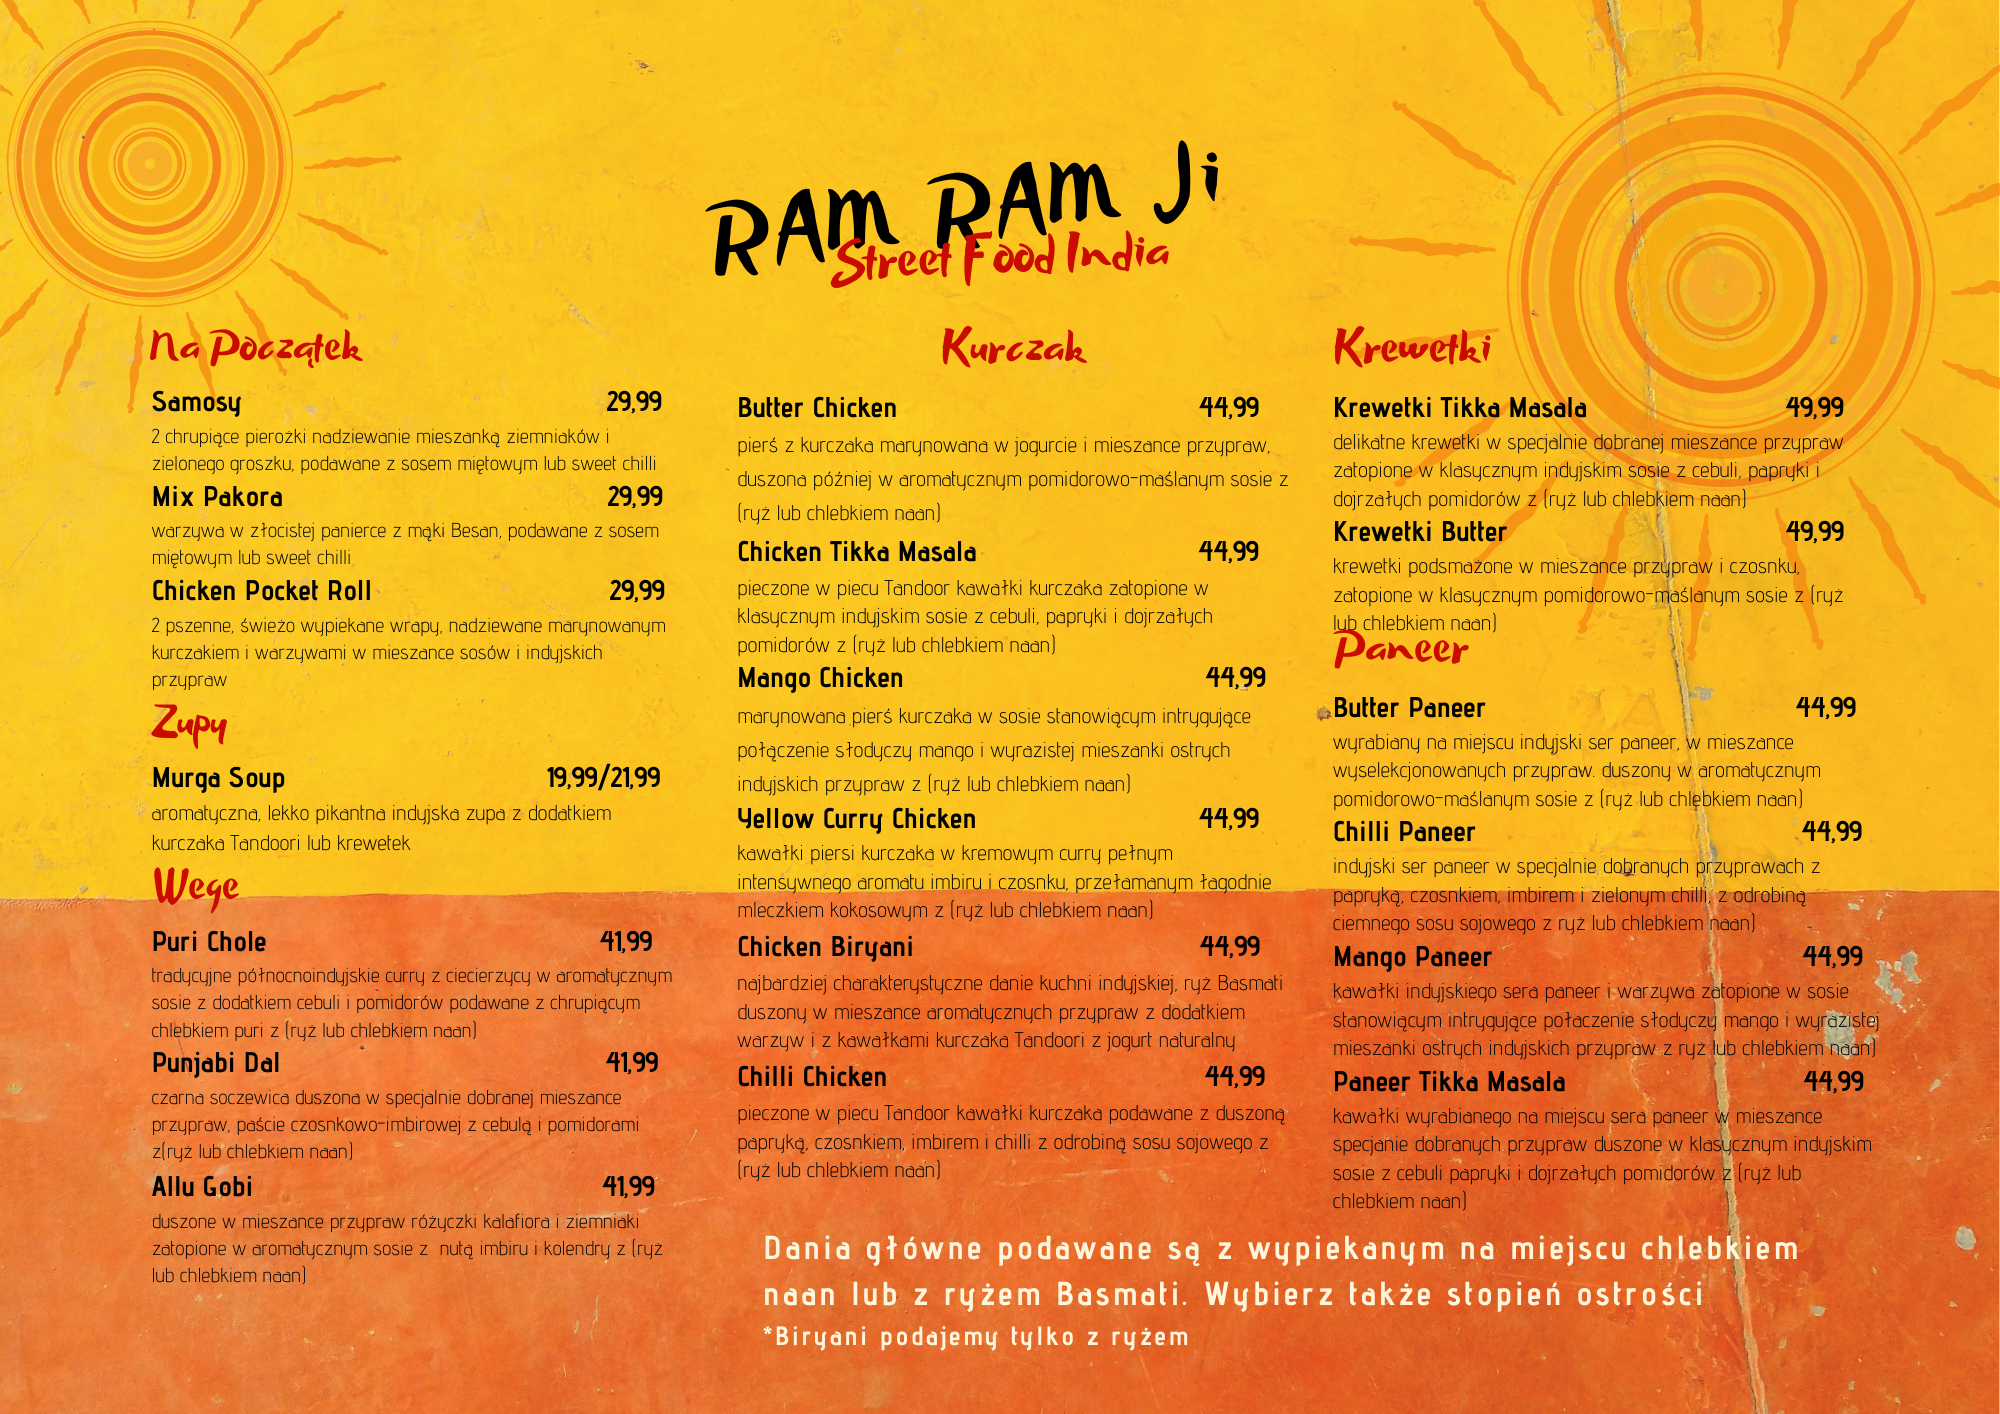 Ram Ram Ji Gdynia menu